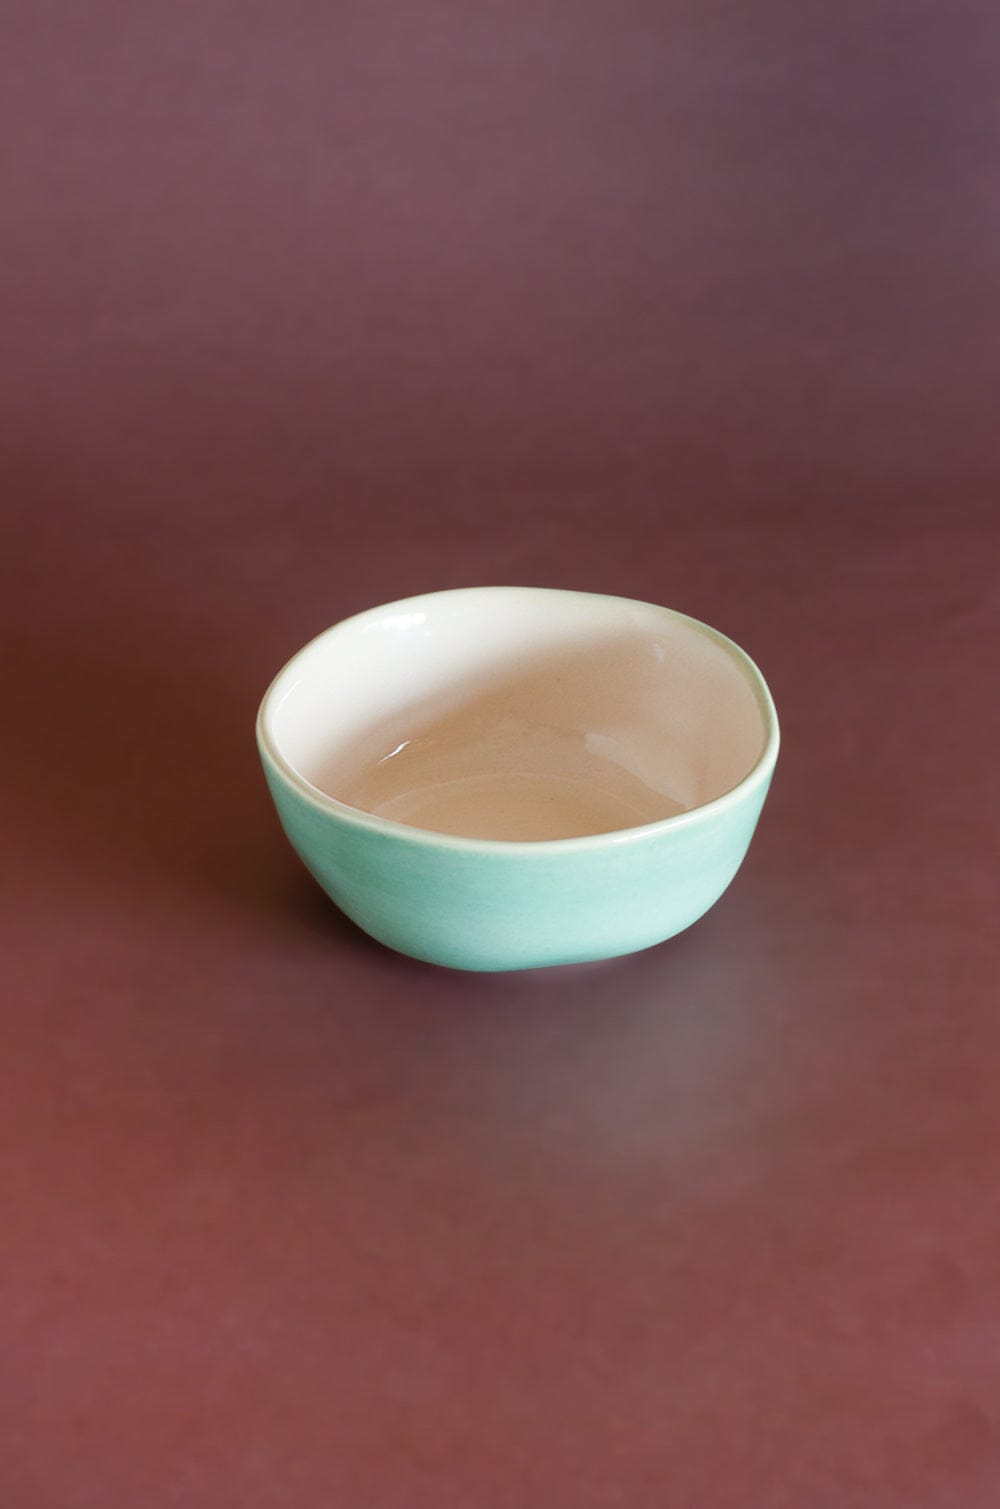 Bisque Ceramic Organic Shape Bowl - Small